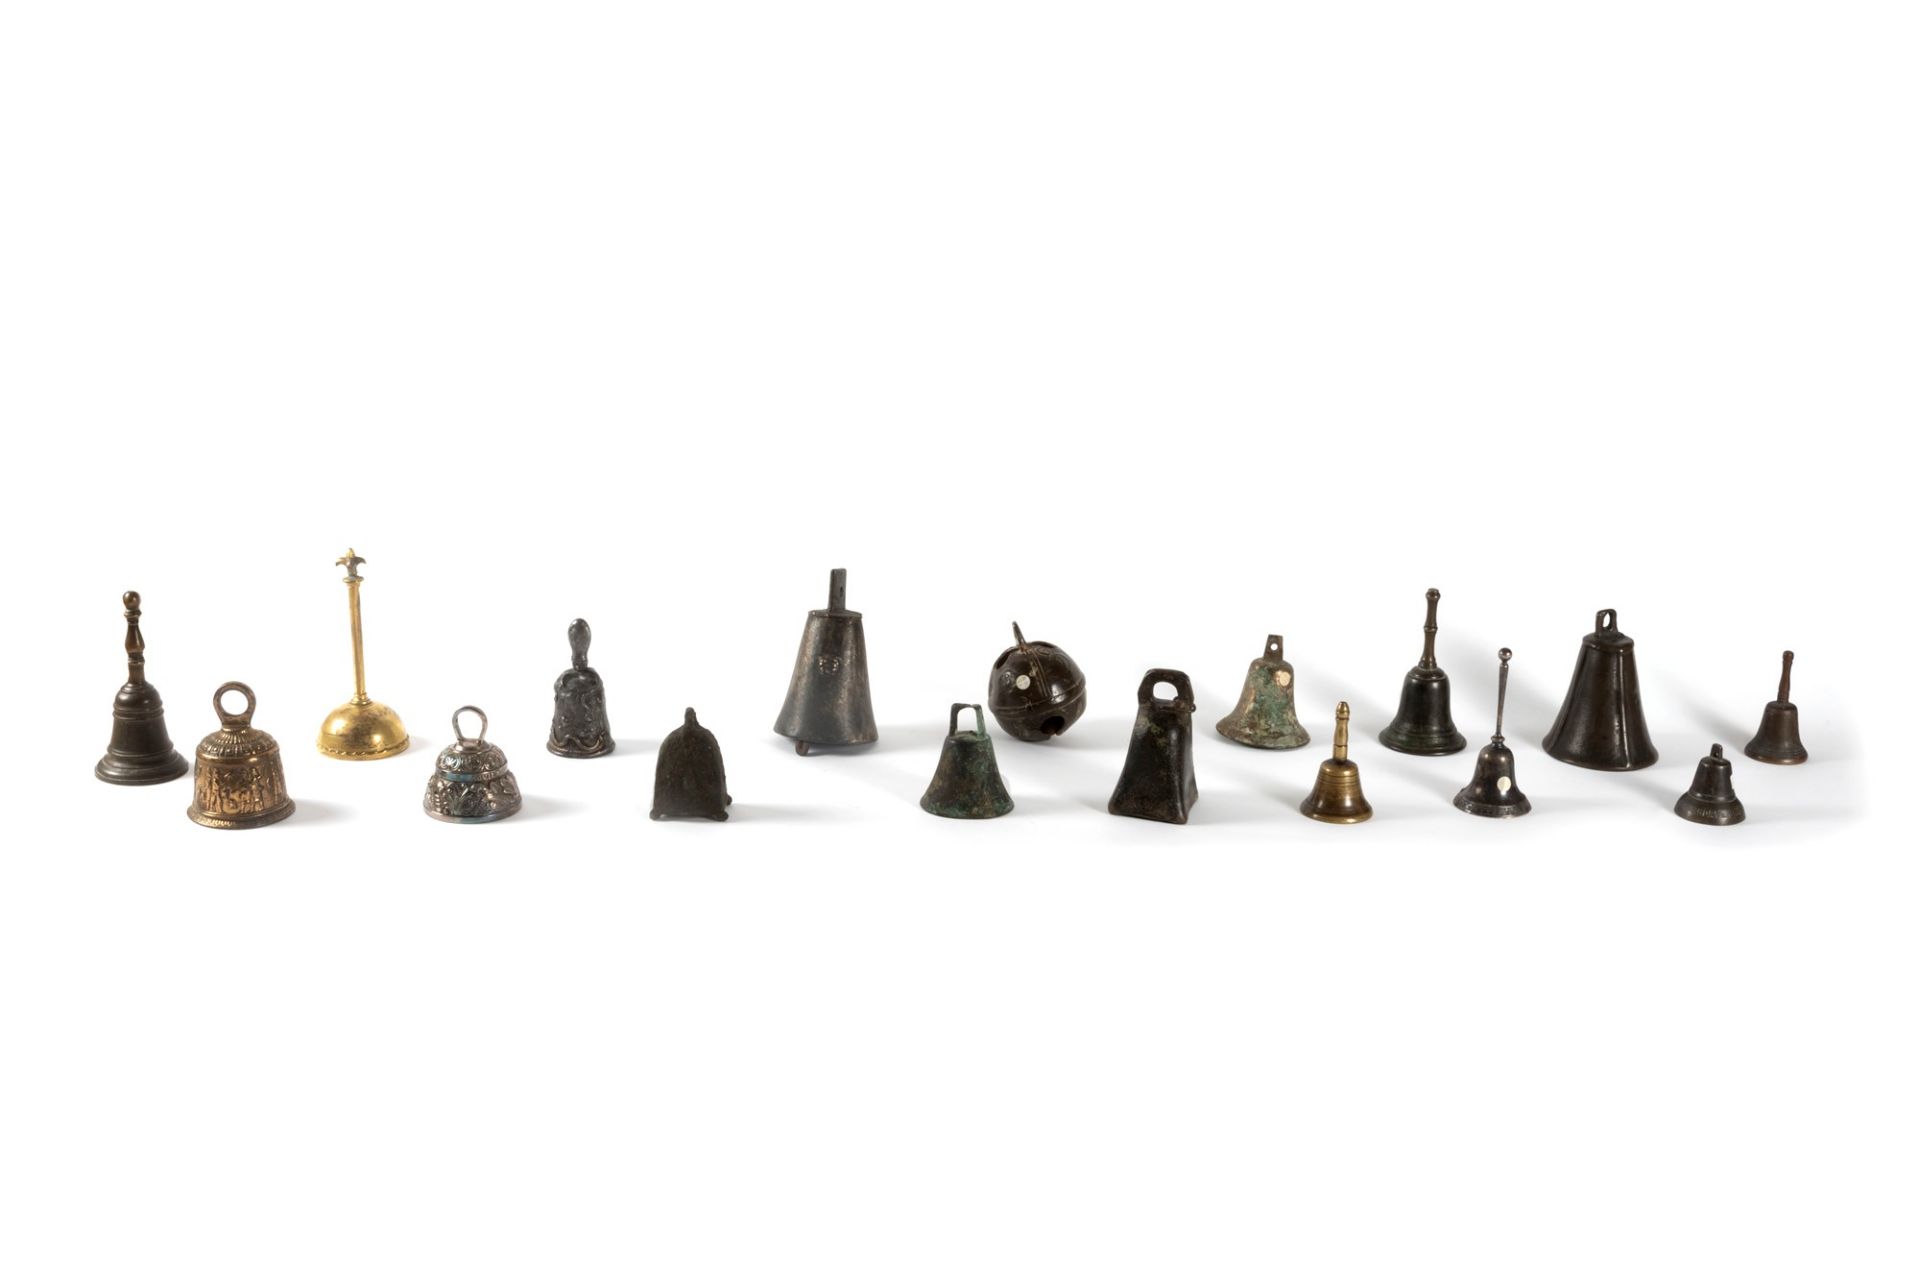 Lot consisting of 17 bells in various metals and bronze, various periods